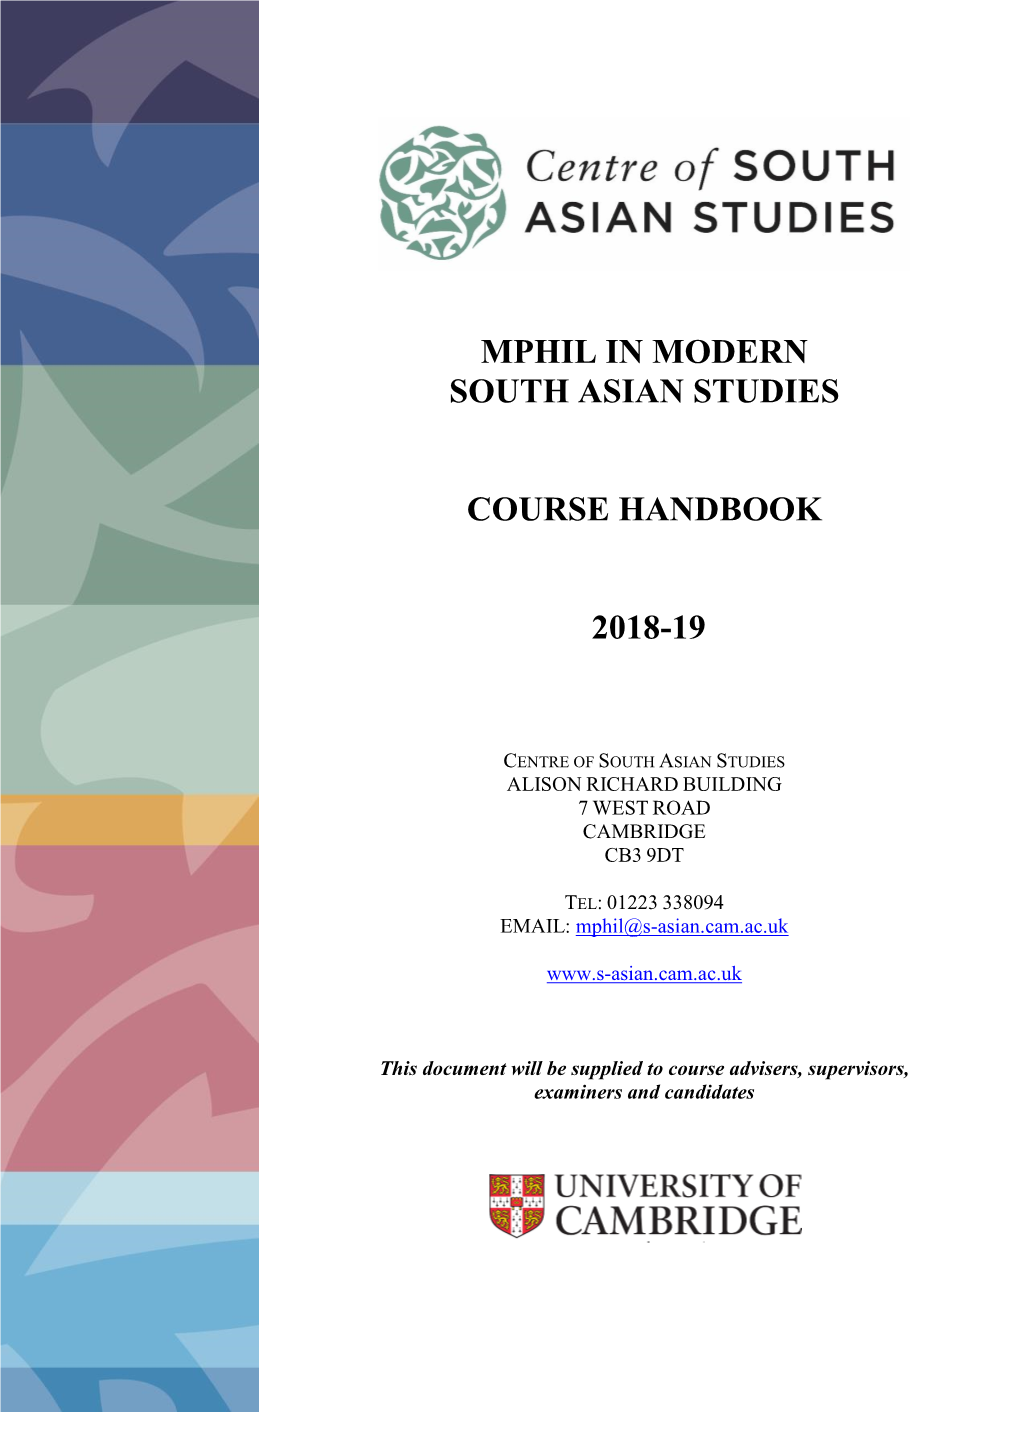 Mphil in Modern South Asian Studies